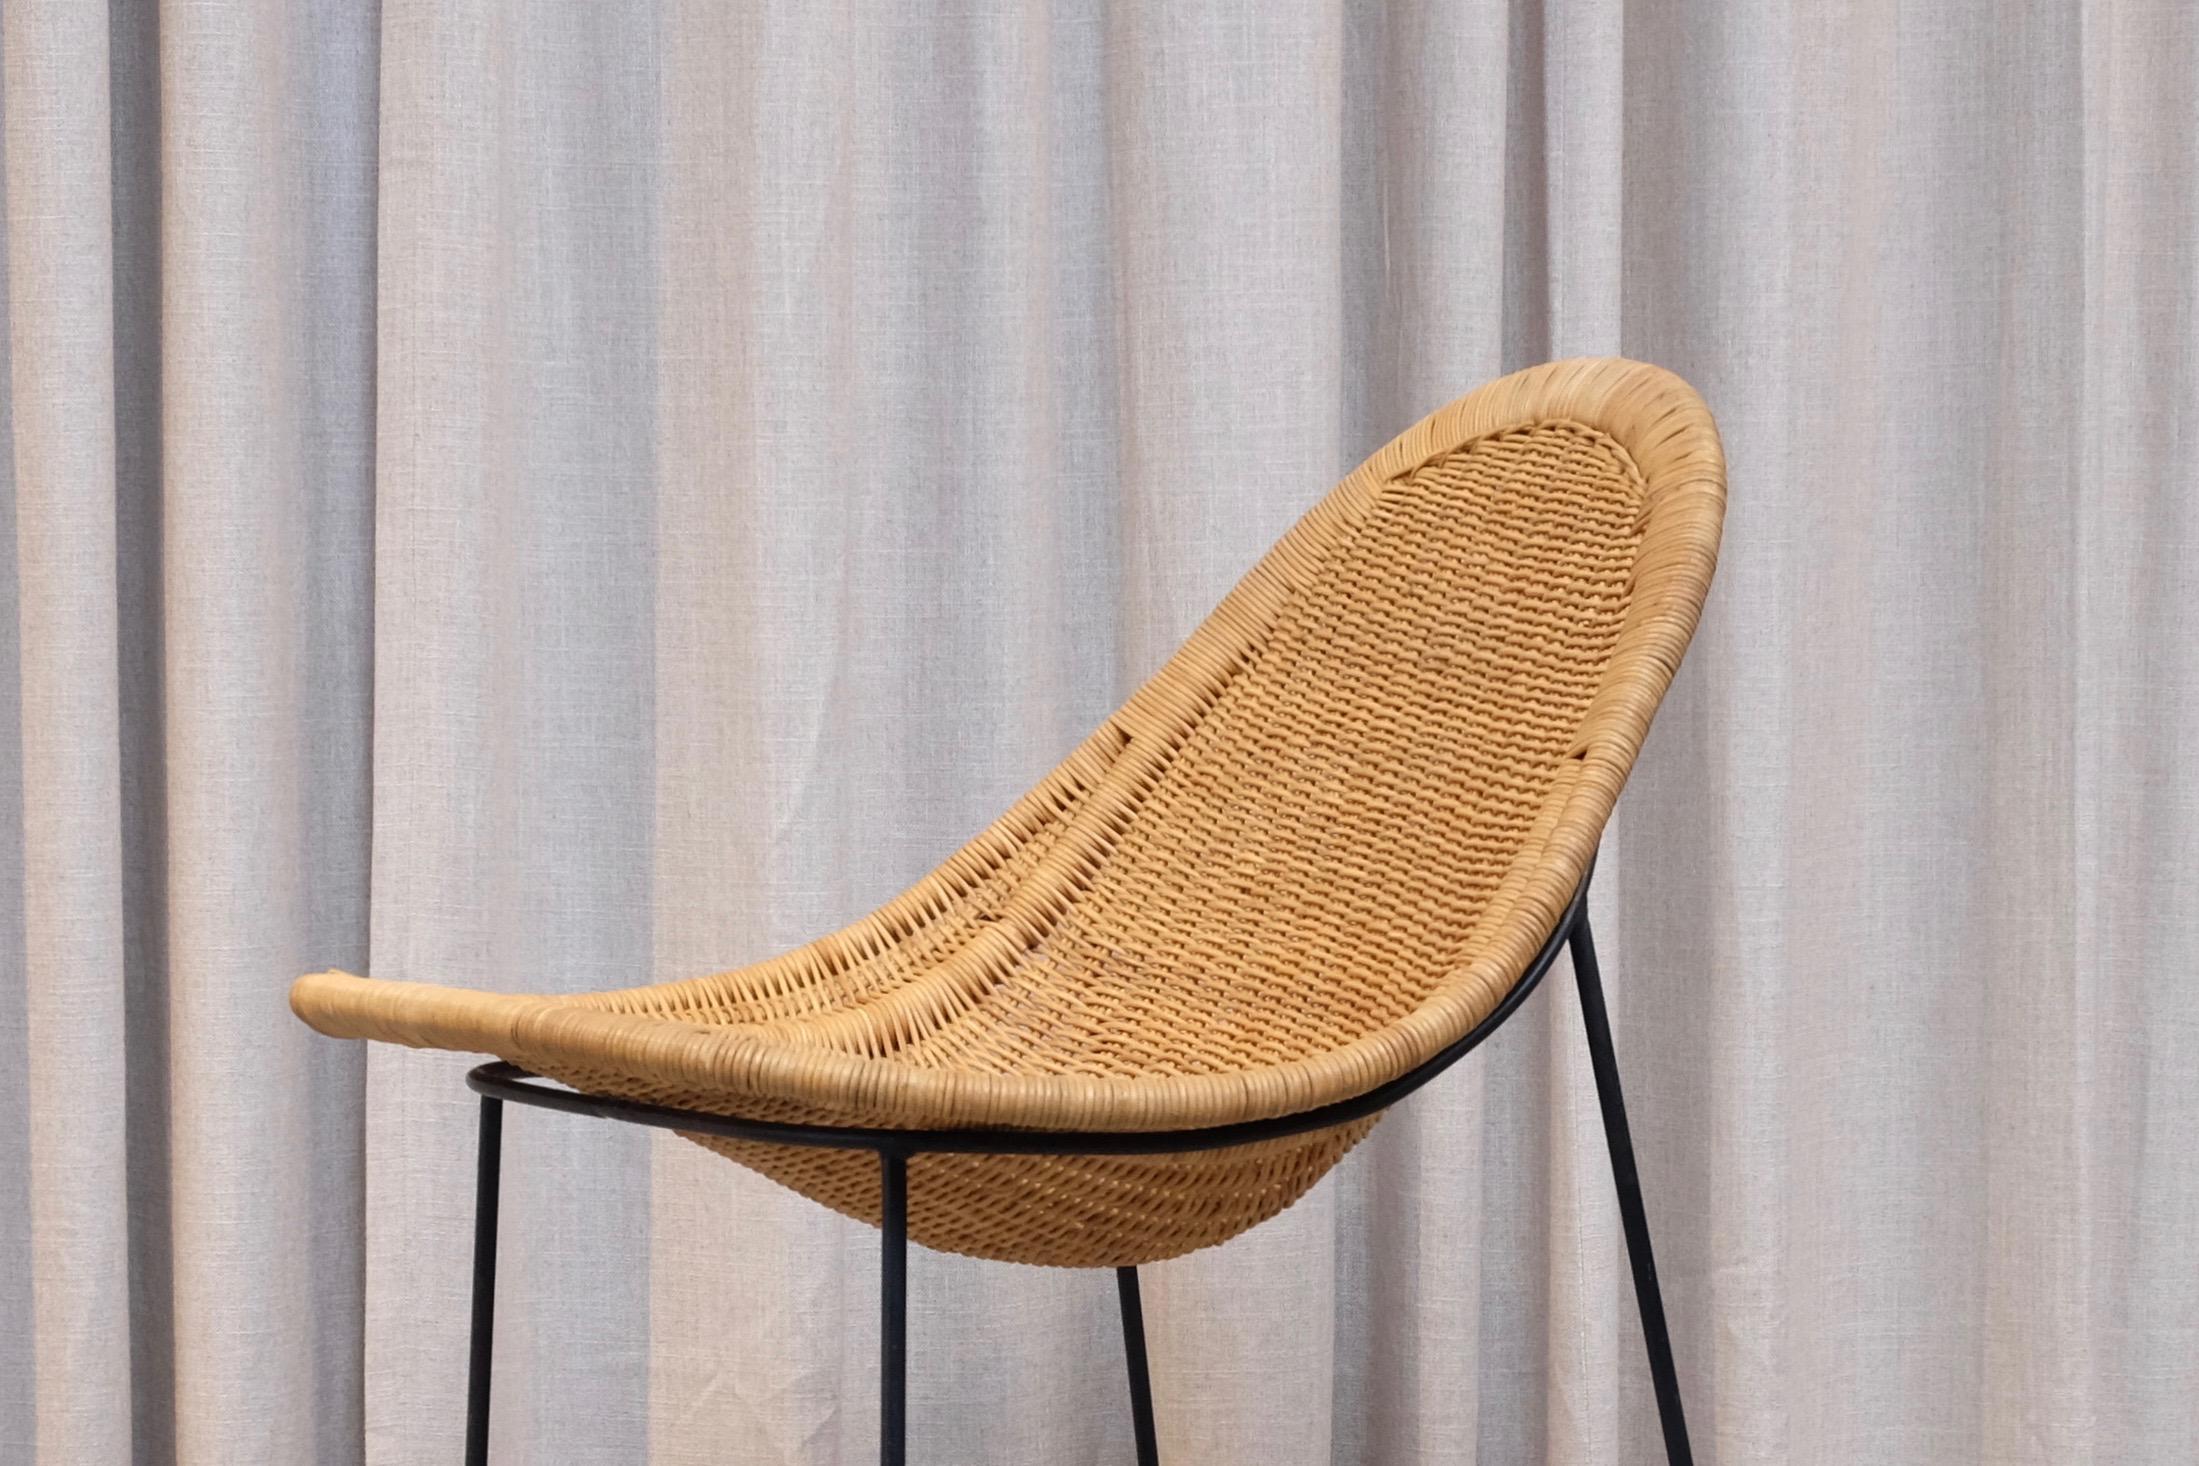 Easy chair model Lilla Kraal designed by Kerstin Hörlin-Holmquist.
Produced by Nordiska Kompaniet (NK) in Sweden, 1950s.